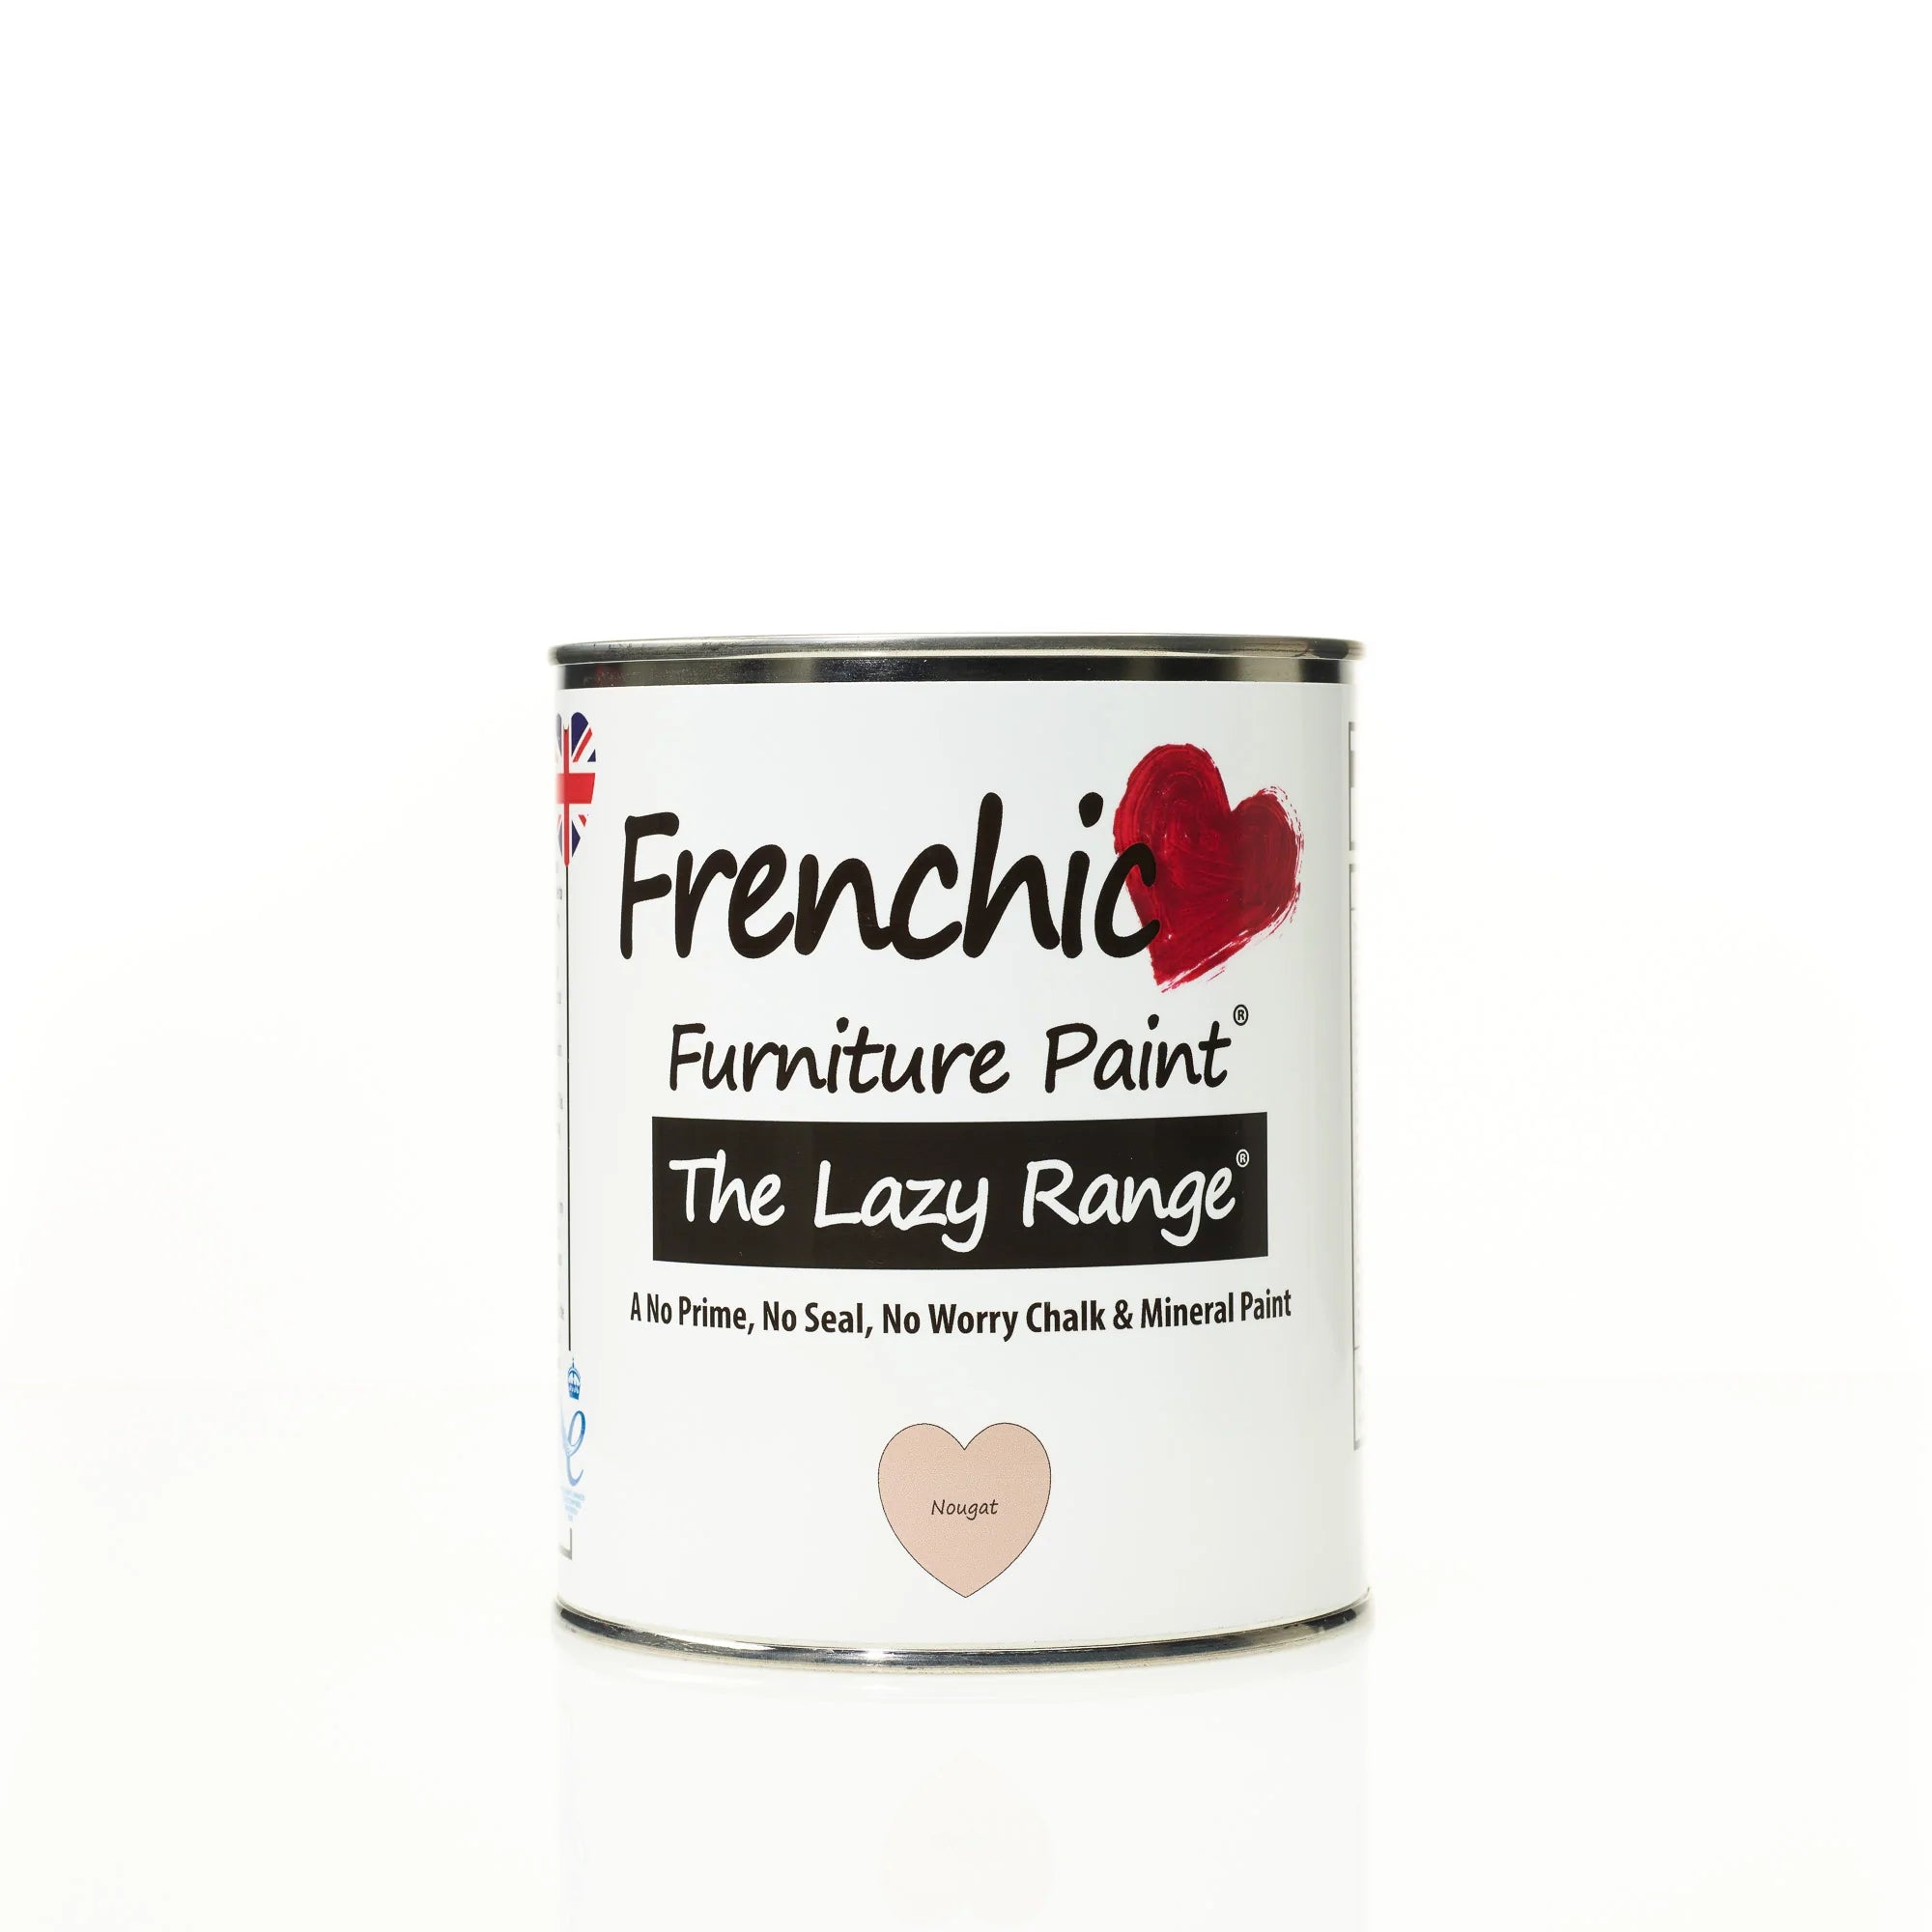 Frenchic Paint | Lazy Range - Nougat by Weirs of Baggot St